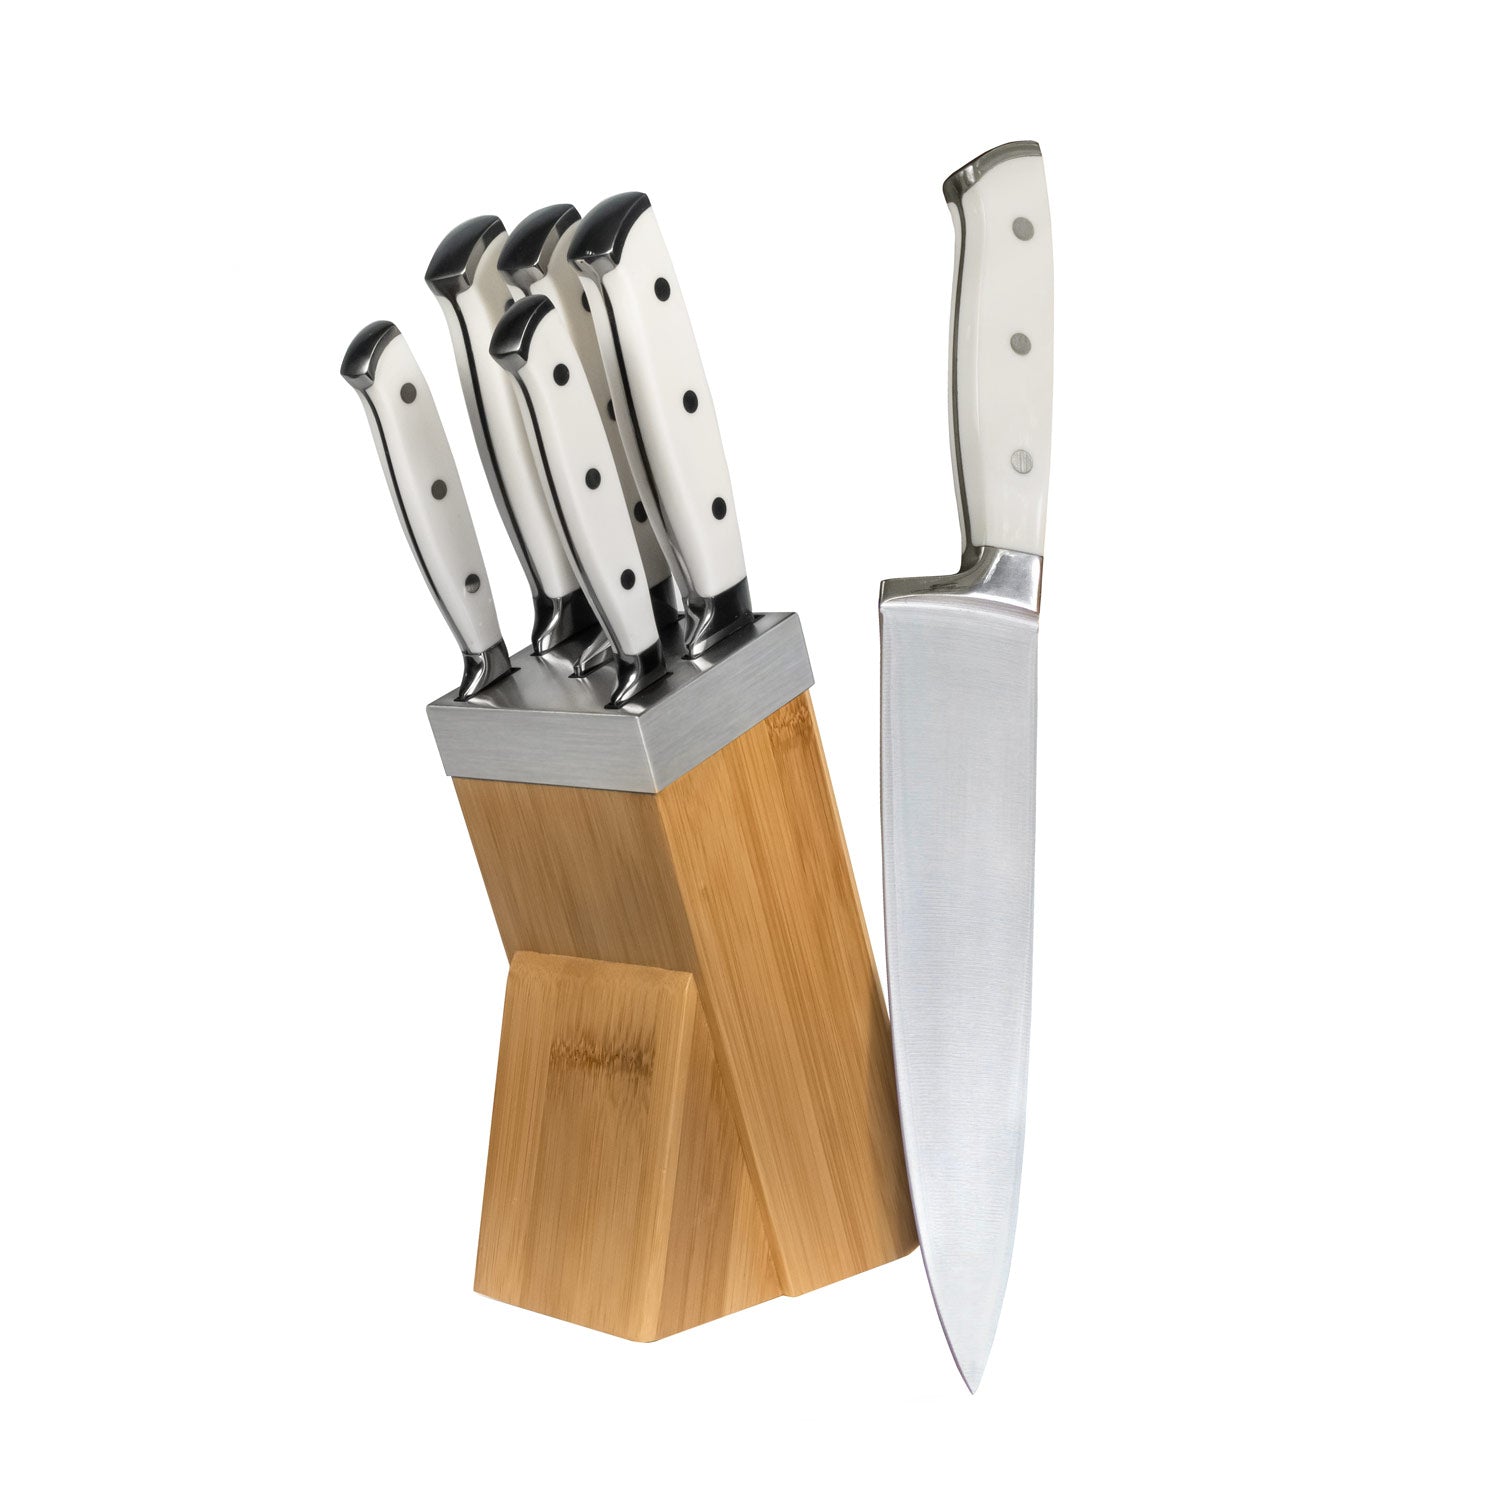 Rite Angler Bamboo Block kitchen knife set